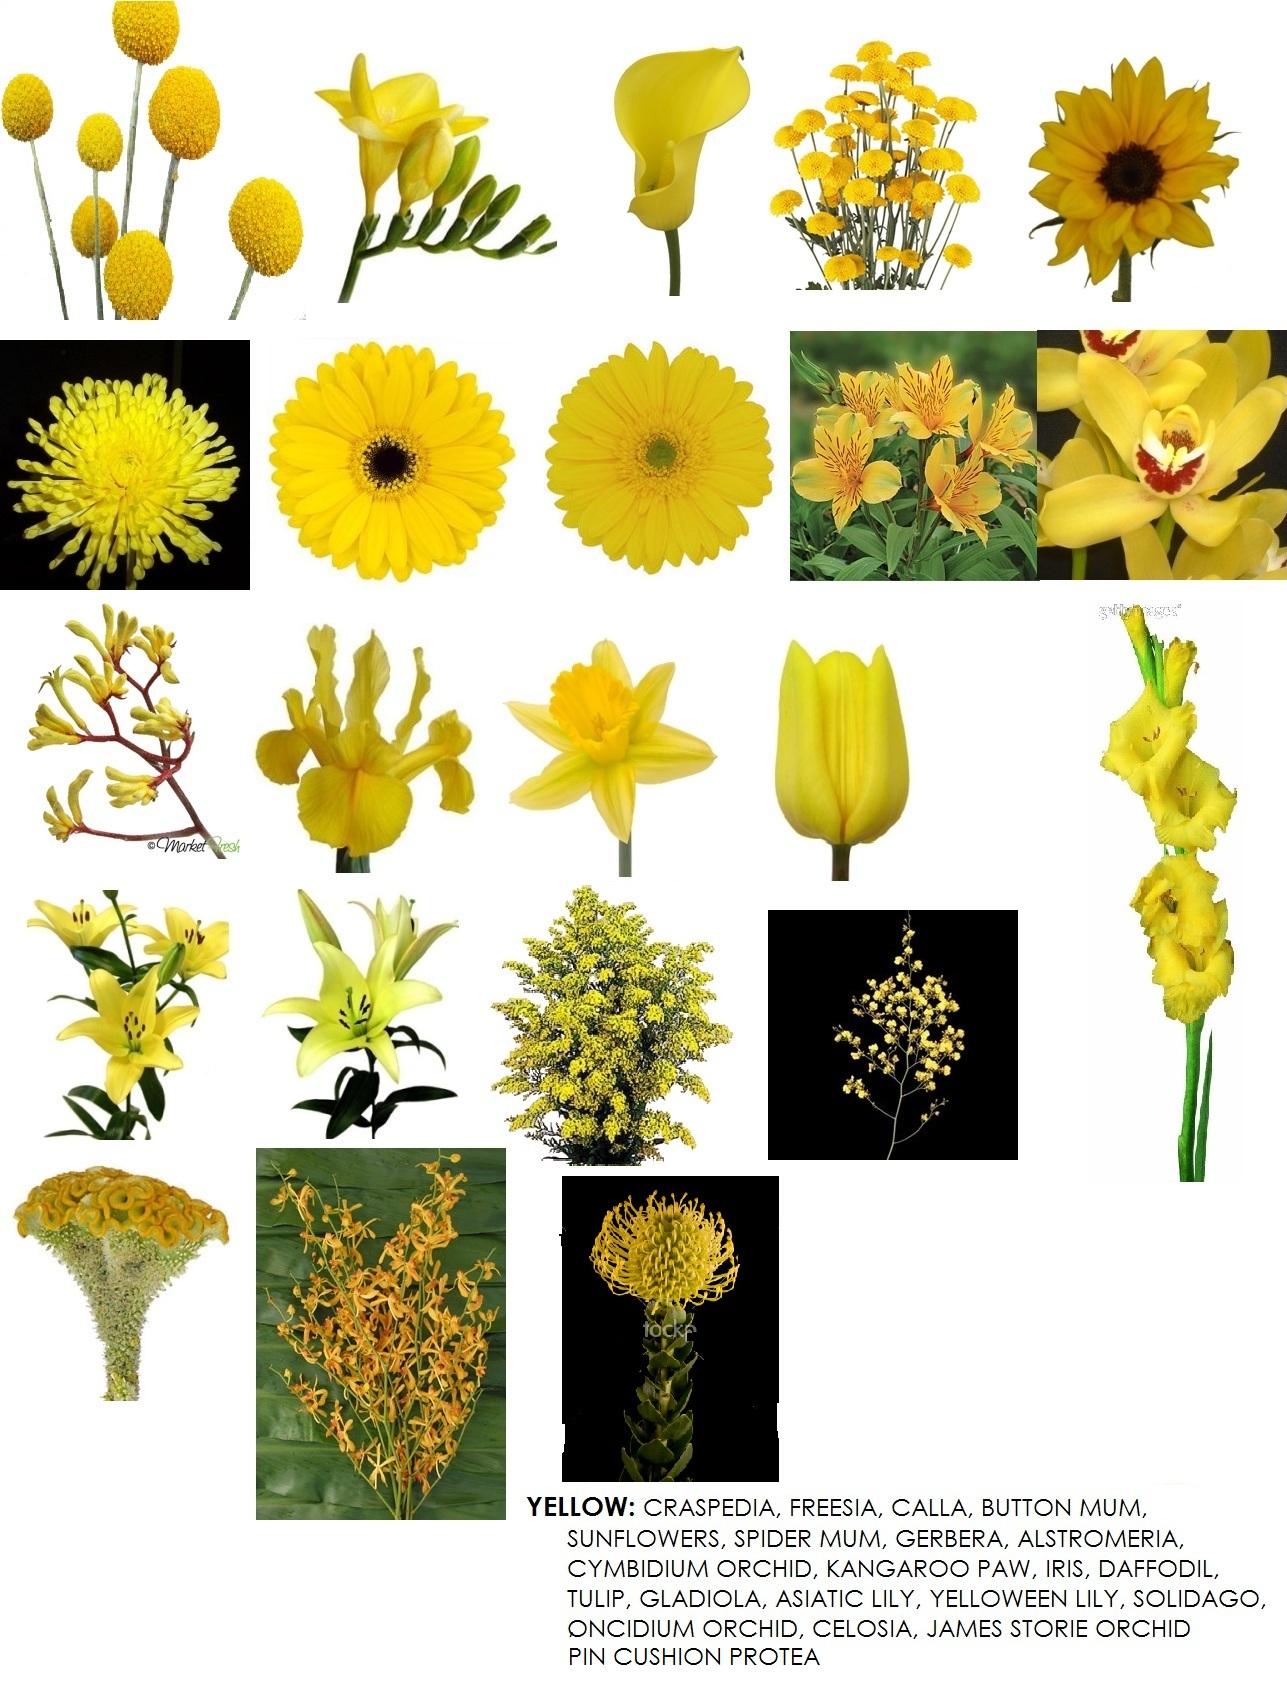 yellow flowers - Dahlia Floral Design